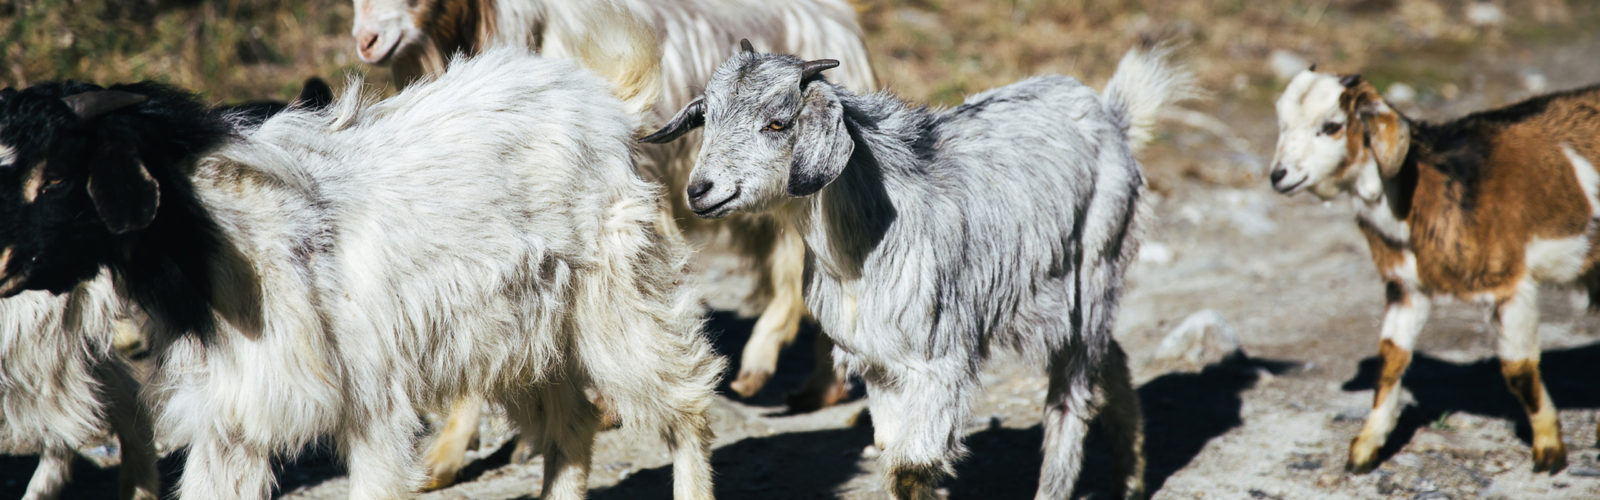 annapurna-region-goats